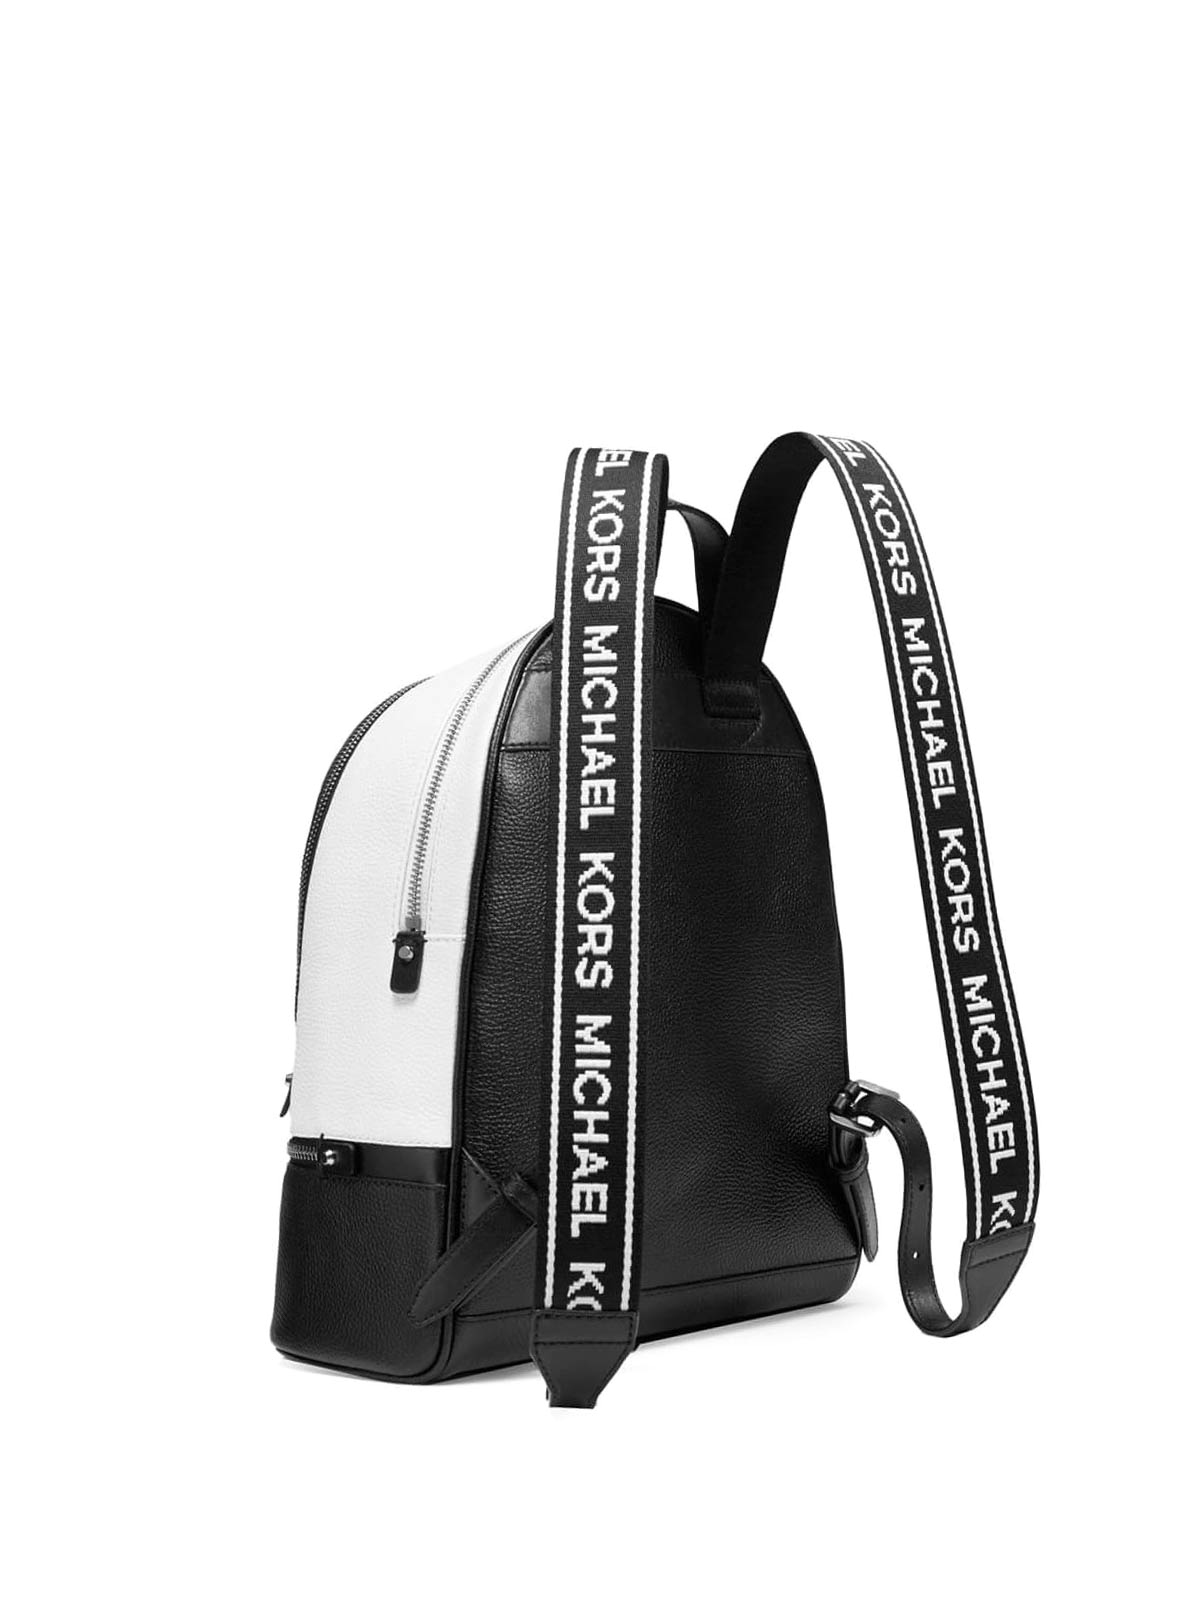 Backpacks Michael Kors - Rhea black and white medium backpack -  30H8SEZB6T012